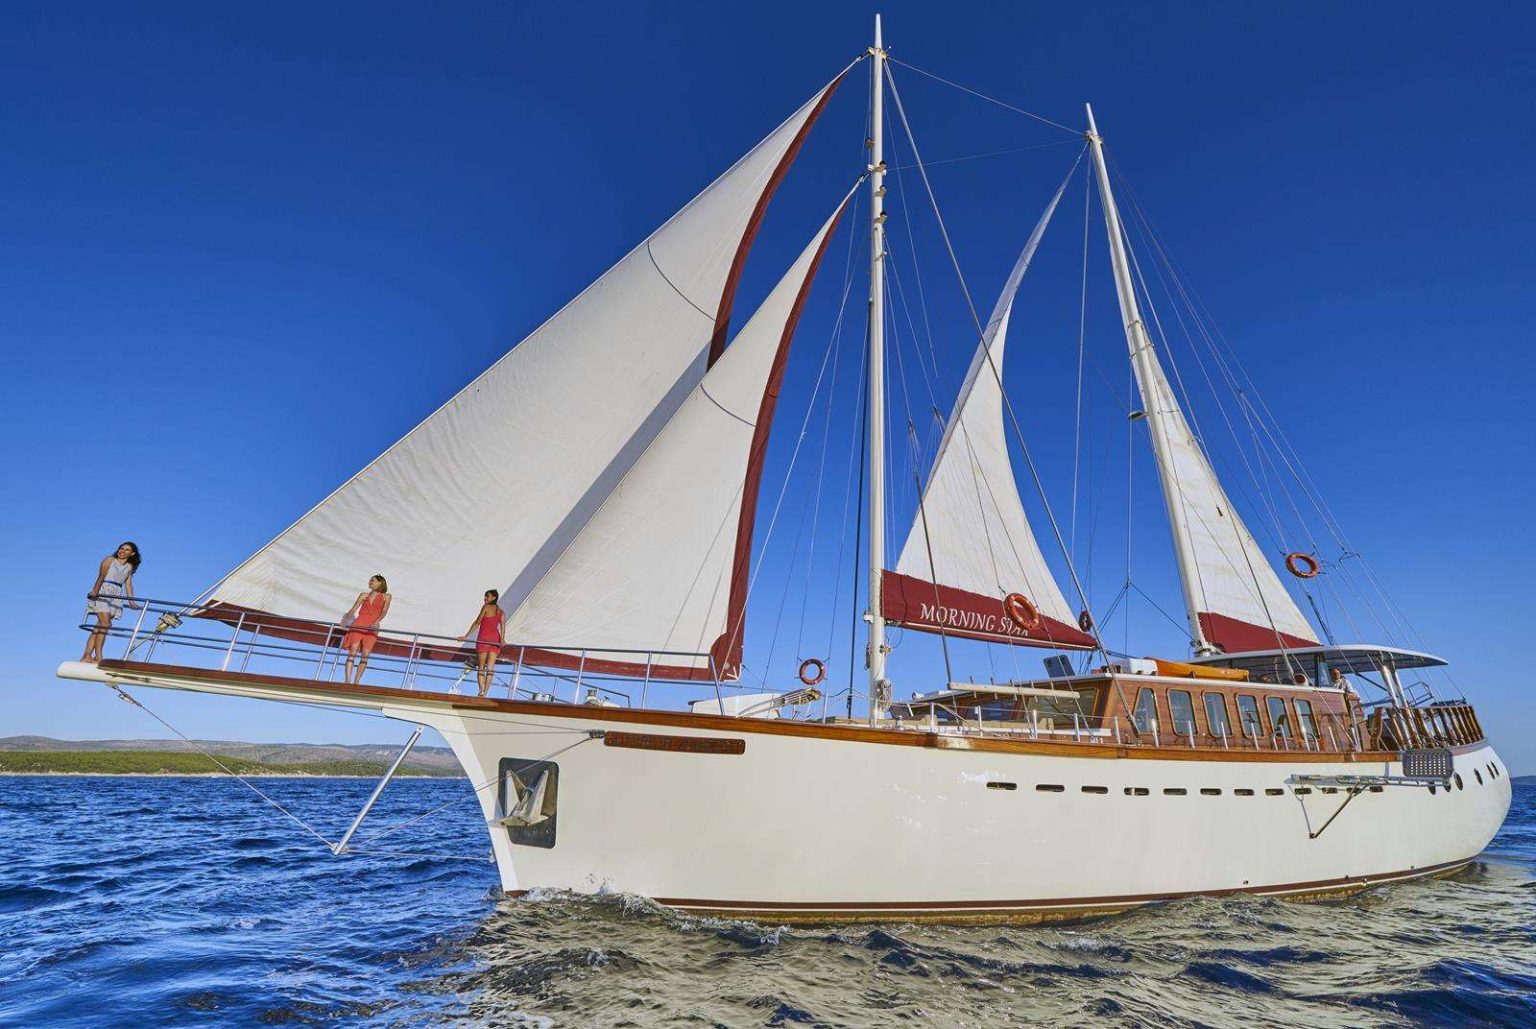 Dawe yachts-barcos-goleta-Morning Star